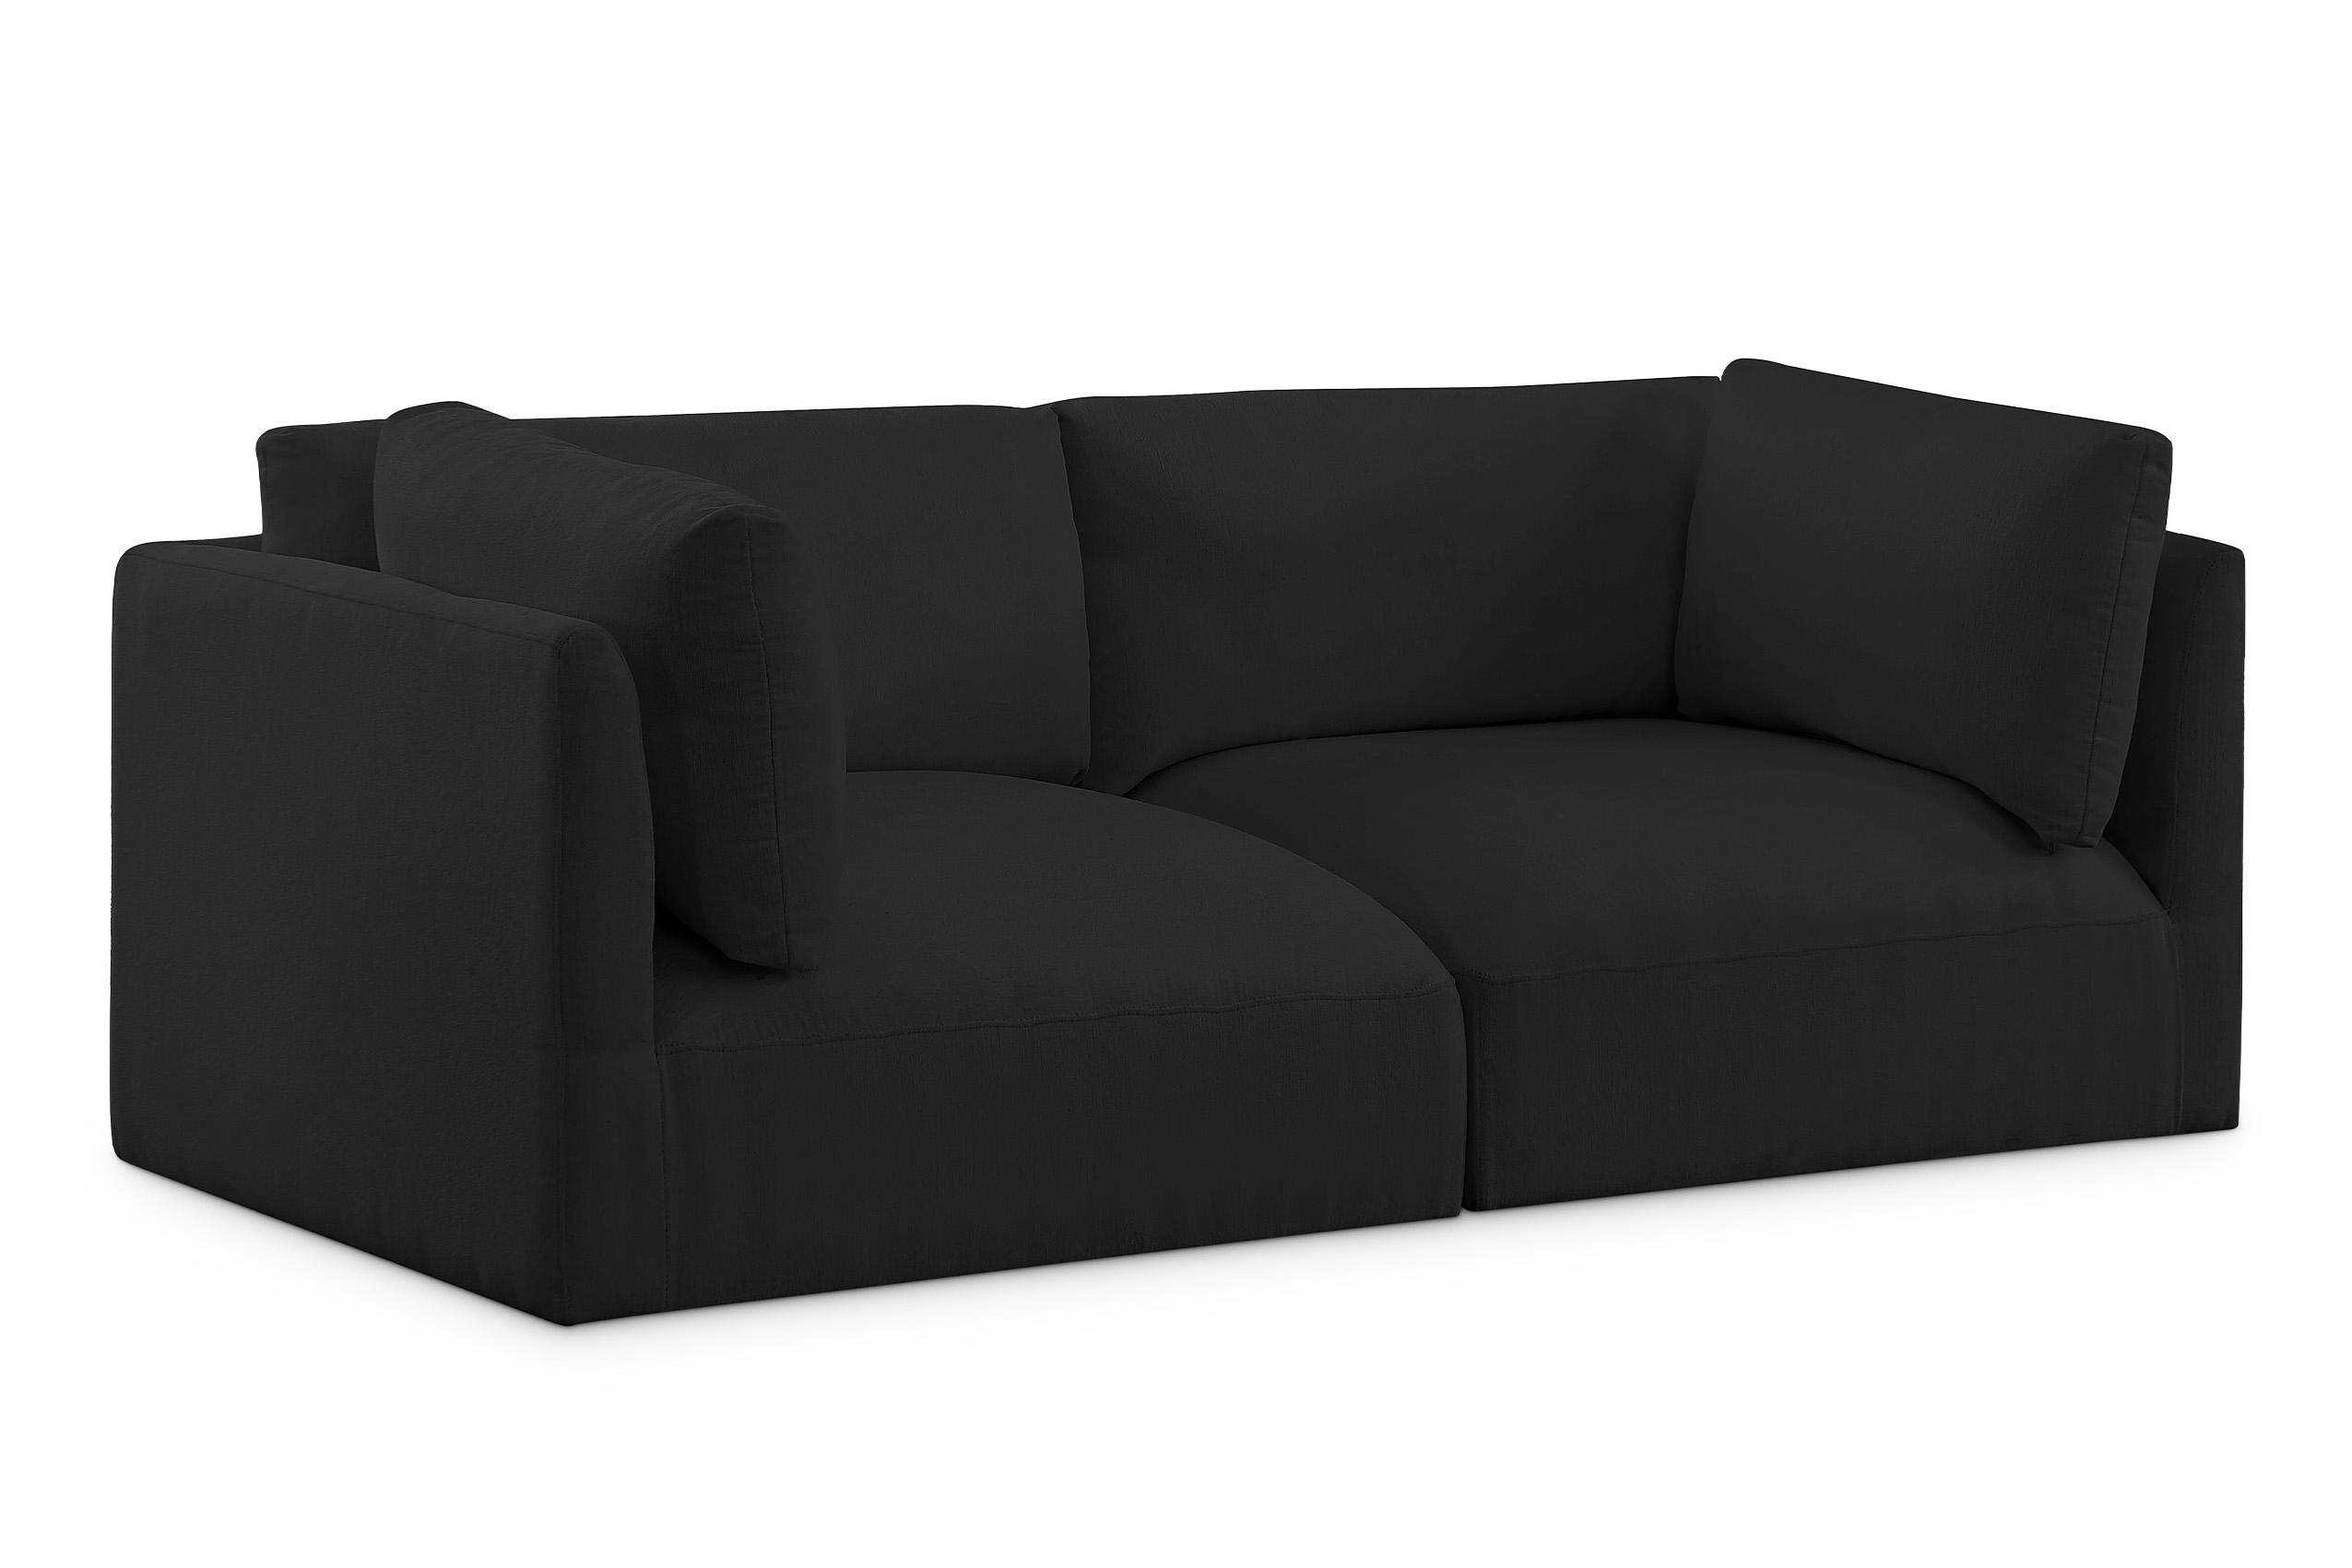 Contemporary, Modern Modular Sofa EASE 696Black-S76B 696Black-S76B in Black Fabric